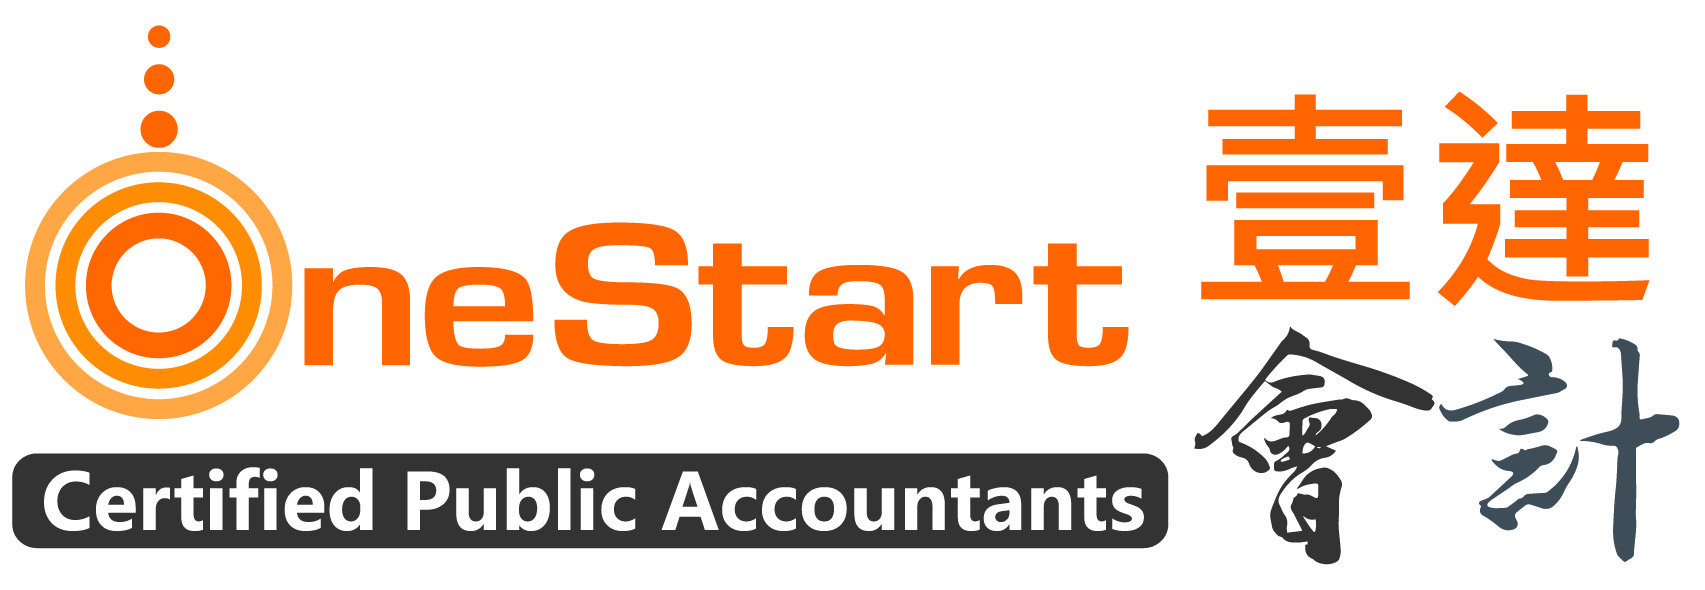 OneStart Certified Public Accountants